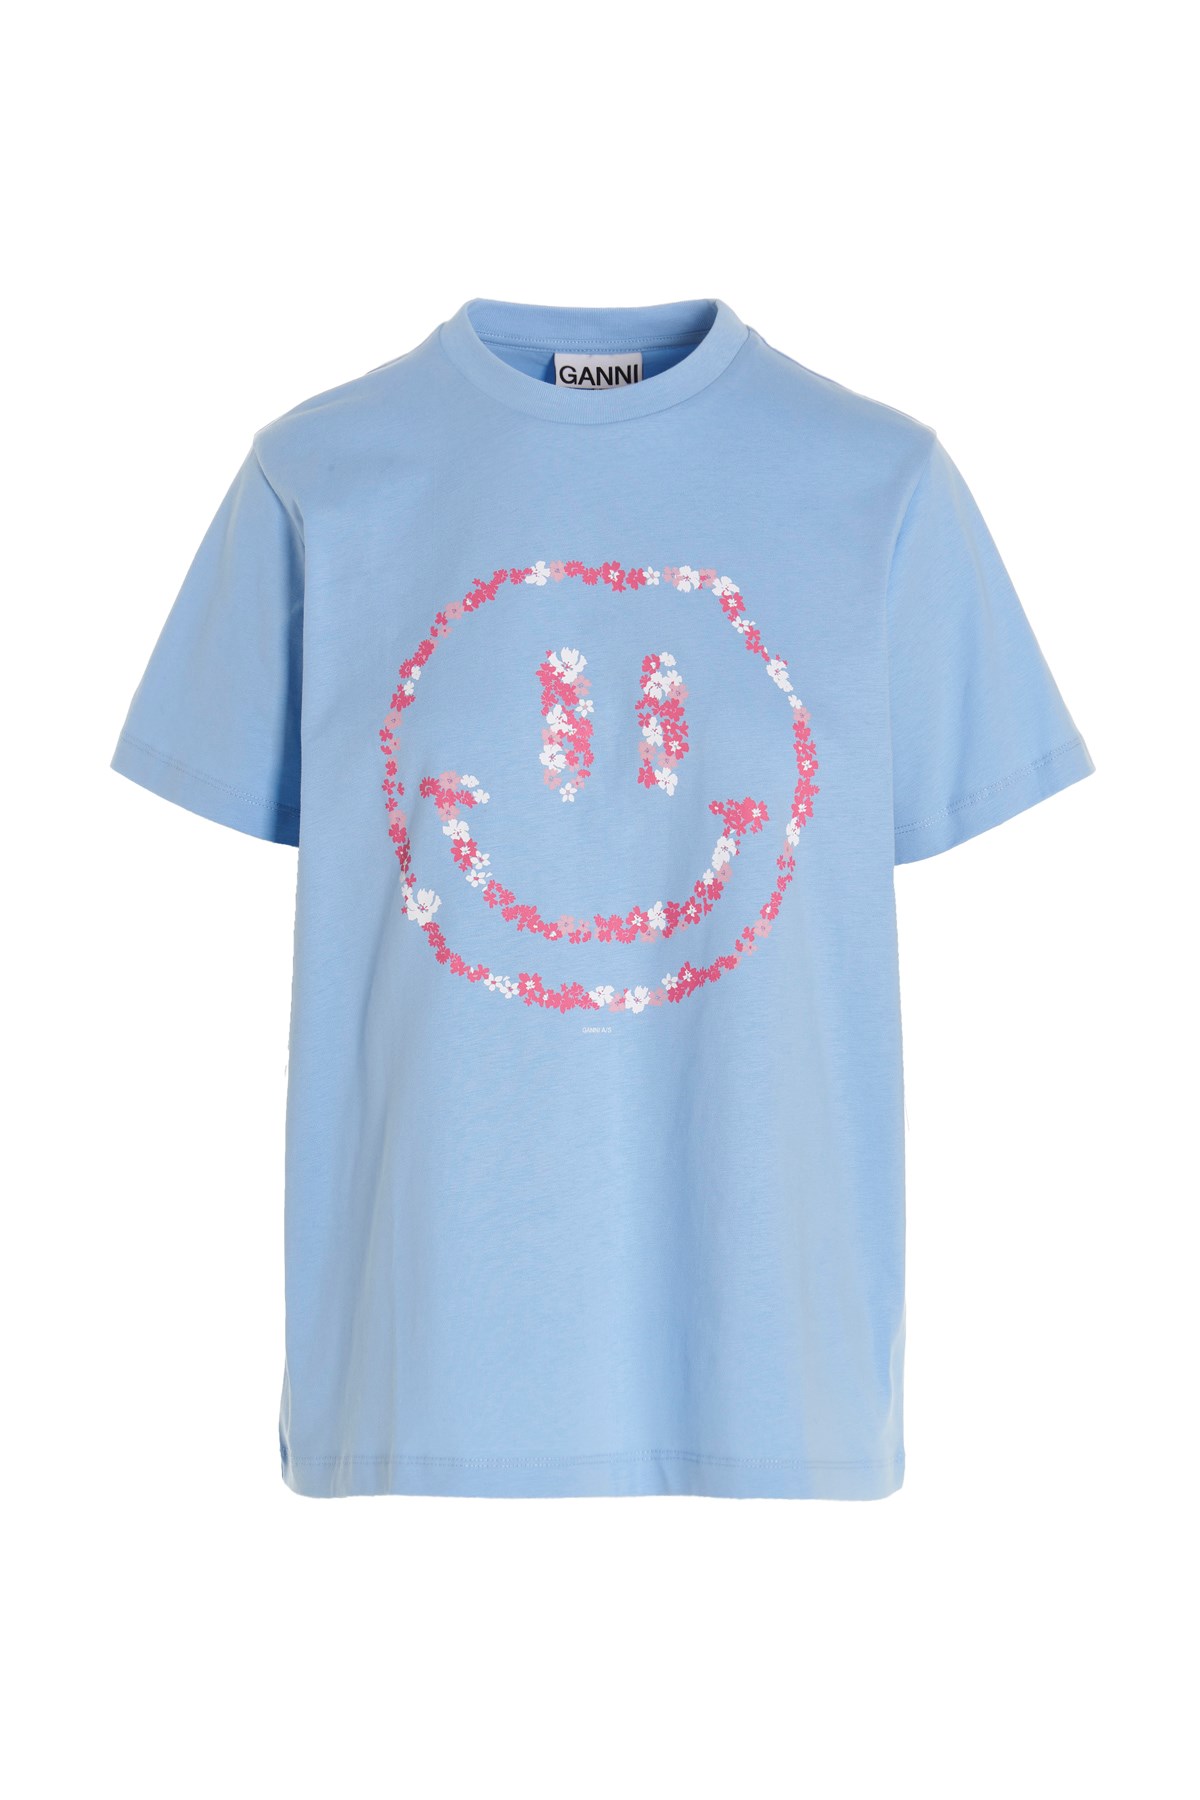 GANNI 'Smile' Print T-Shirt